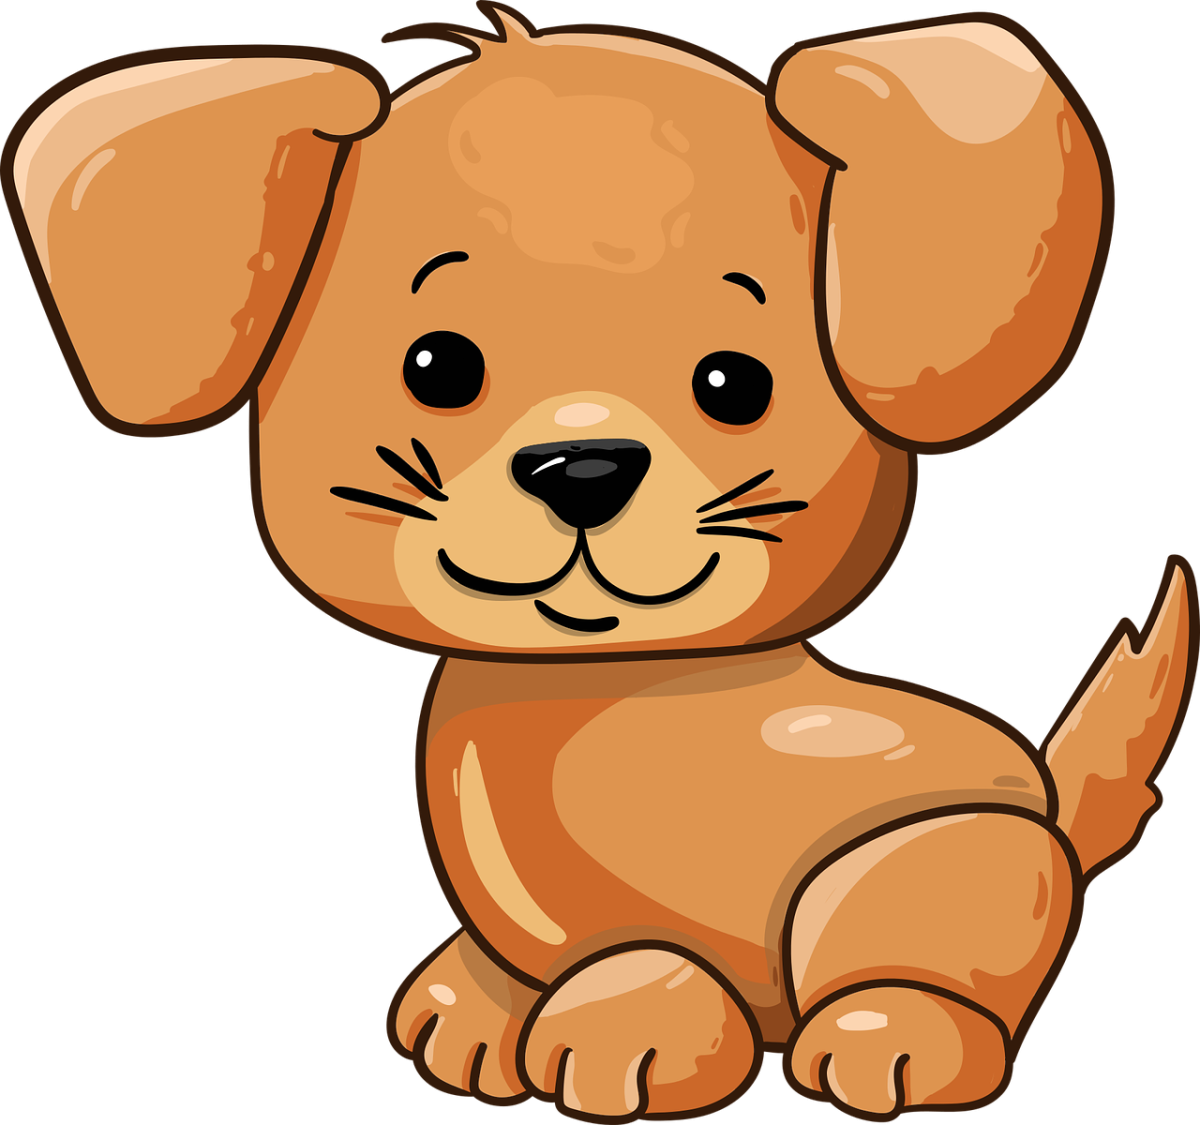 https://pixabay.com/pl/vectors/pies-szczeniak-%C5%82adny-karykatura-3542195/